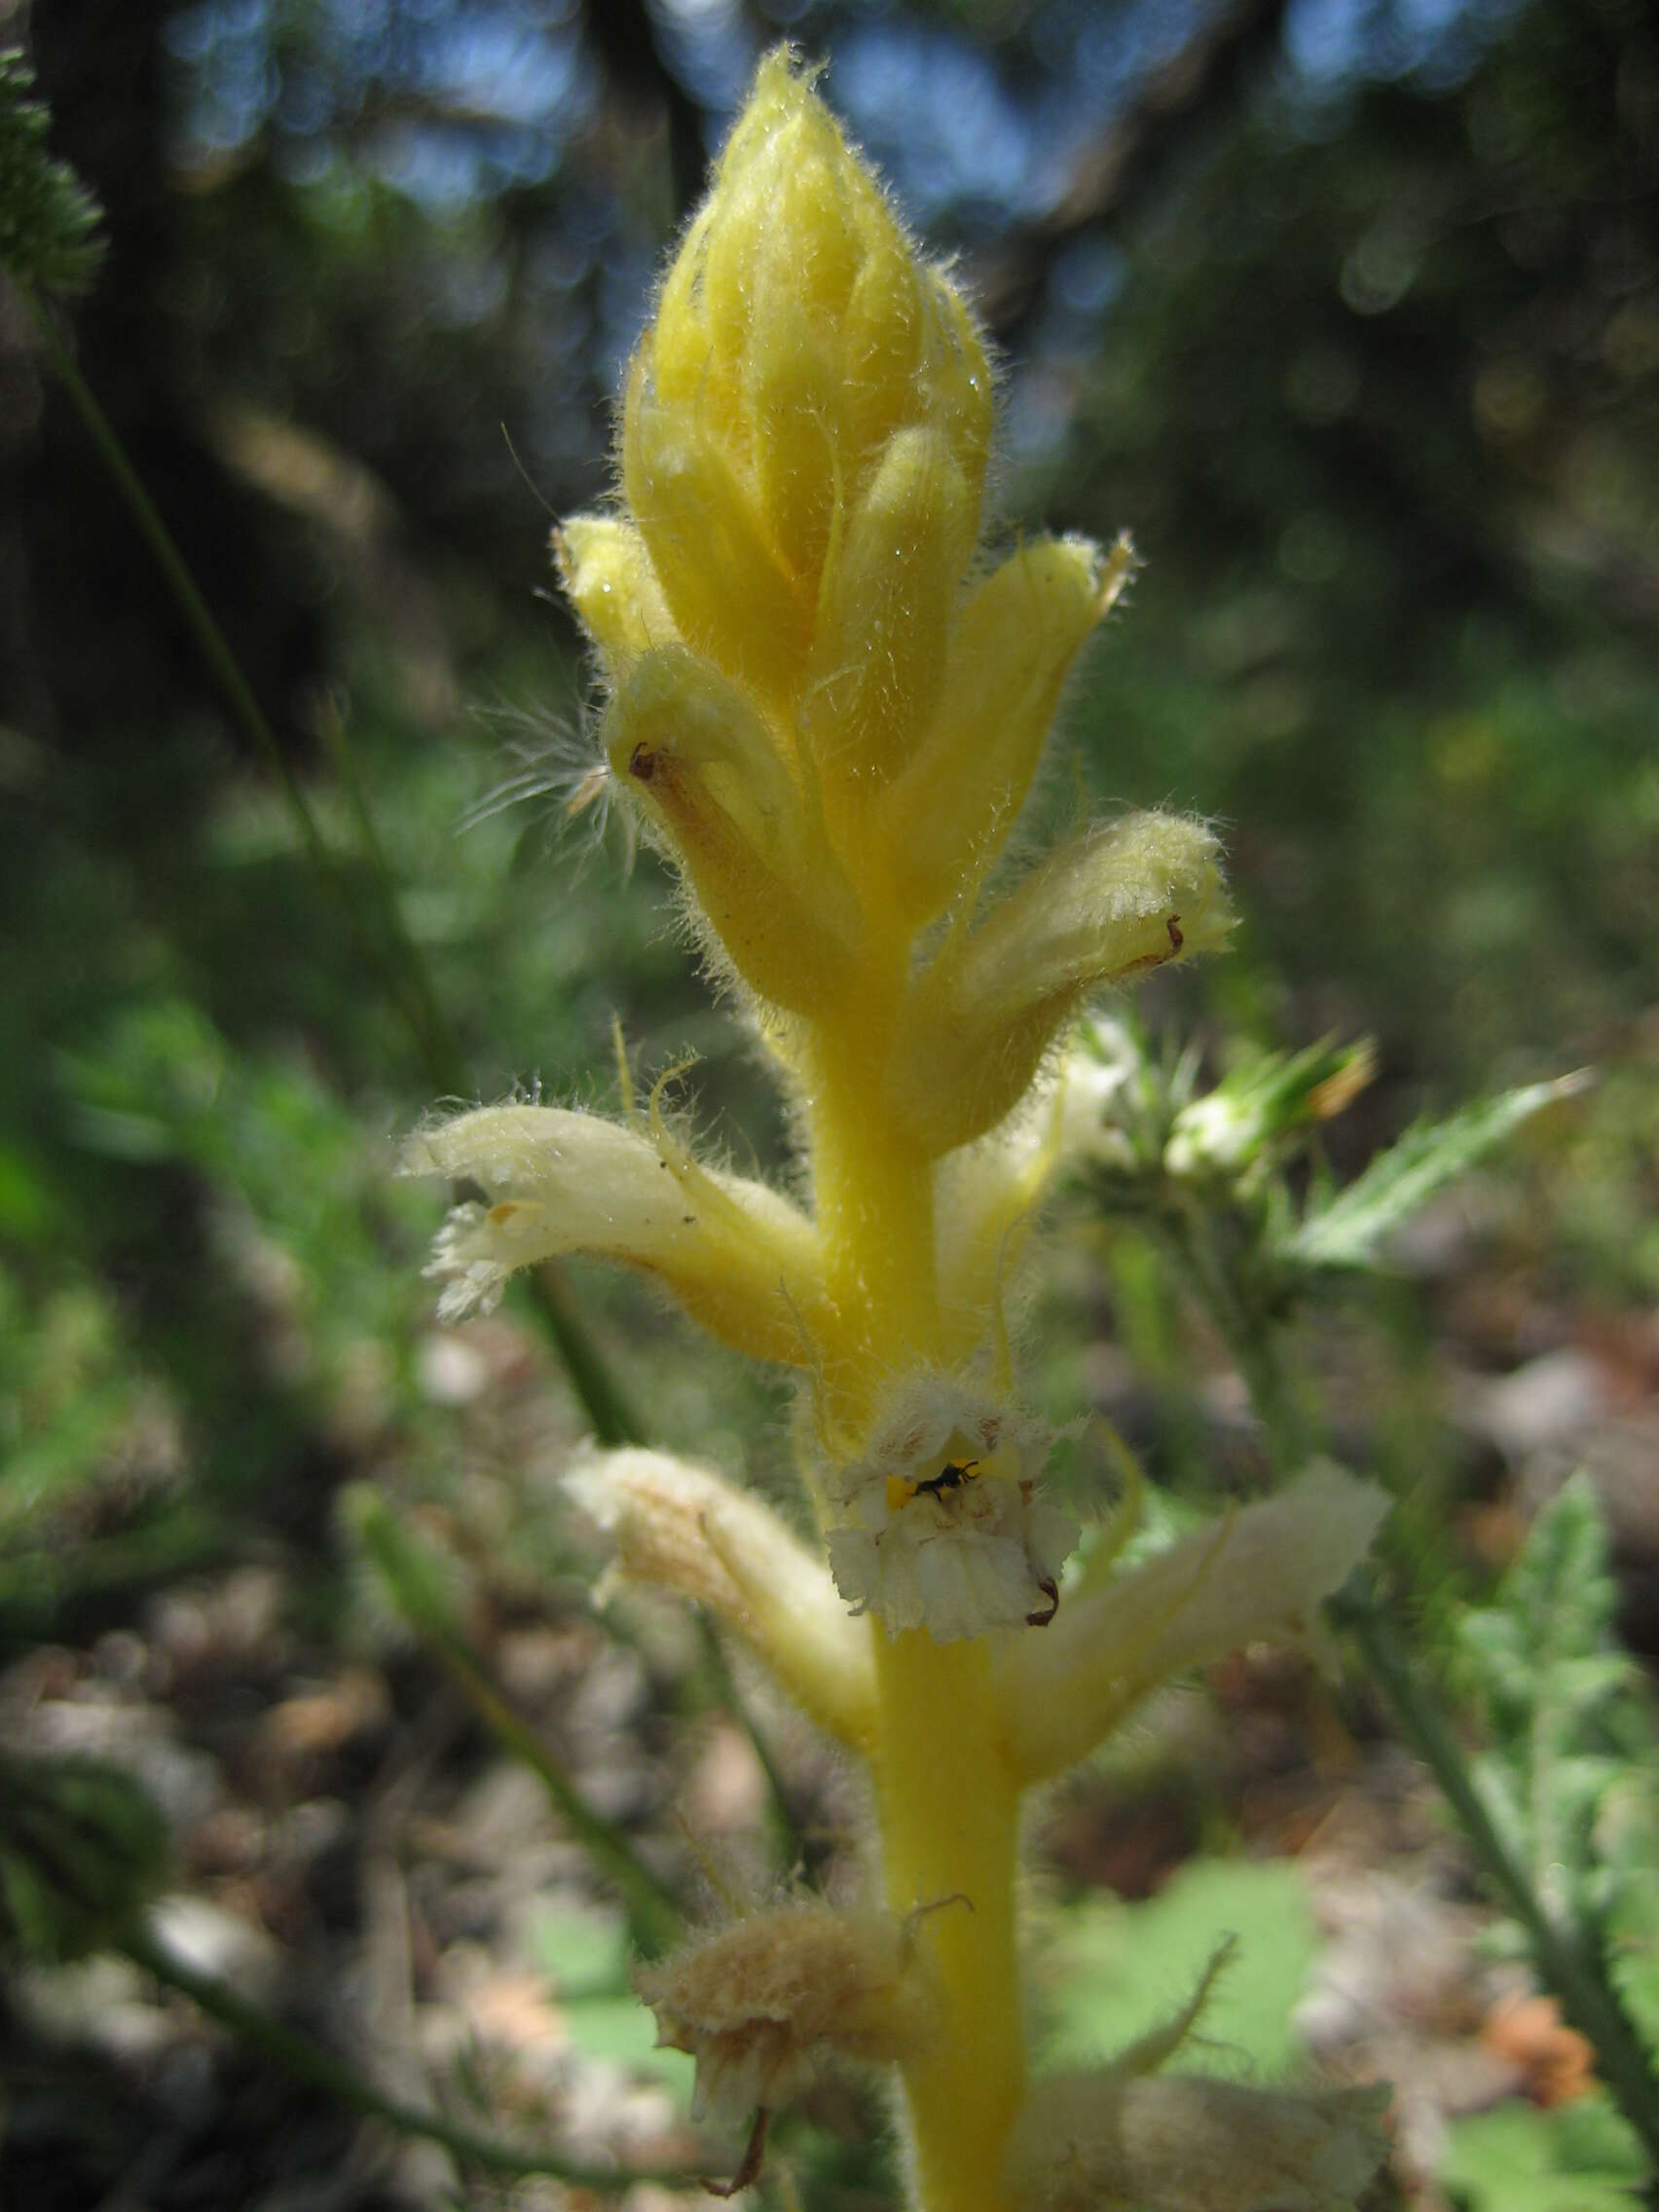 Image of Orobanche pubescens Dum.-Urville